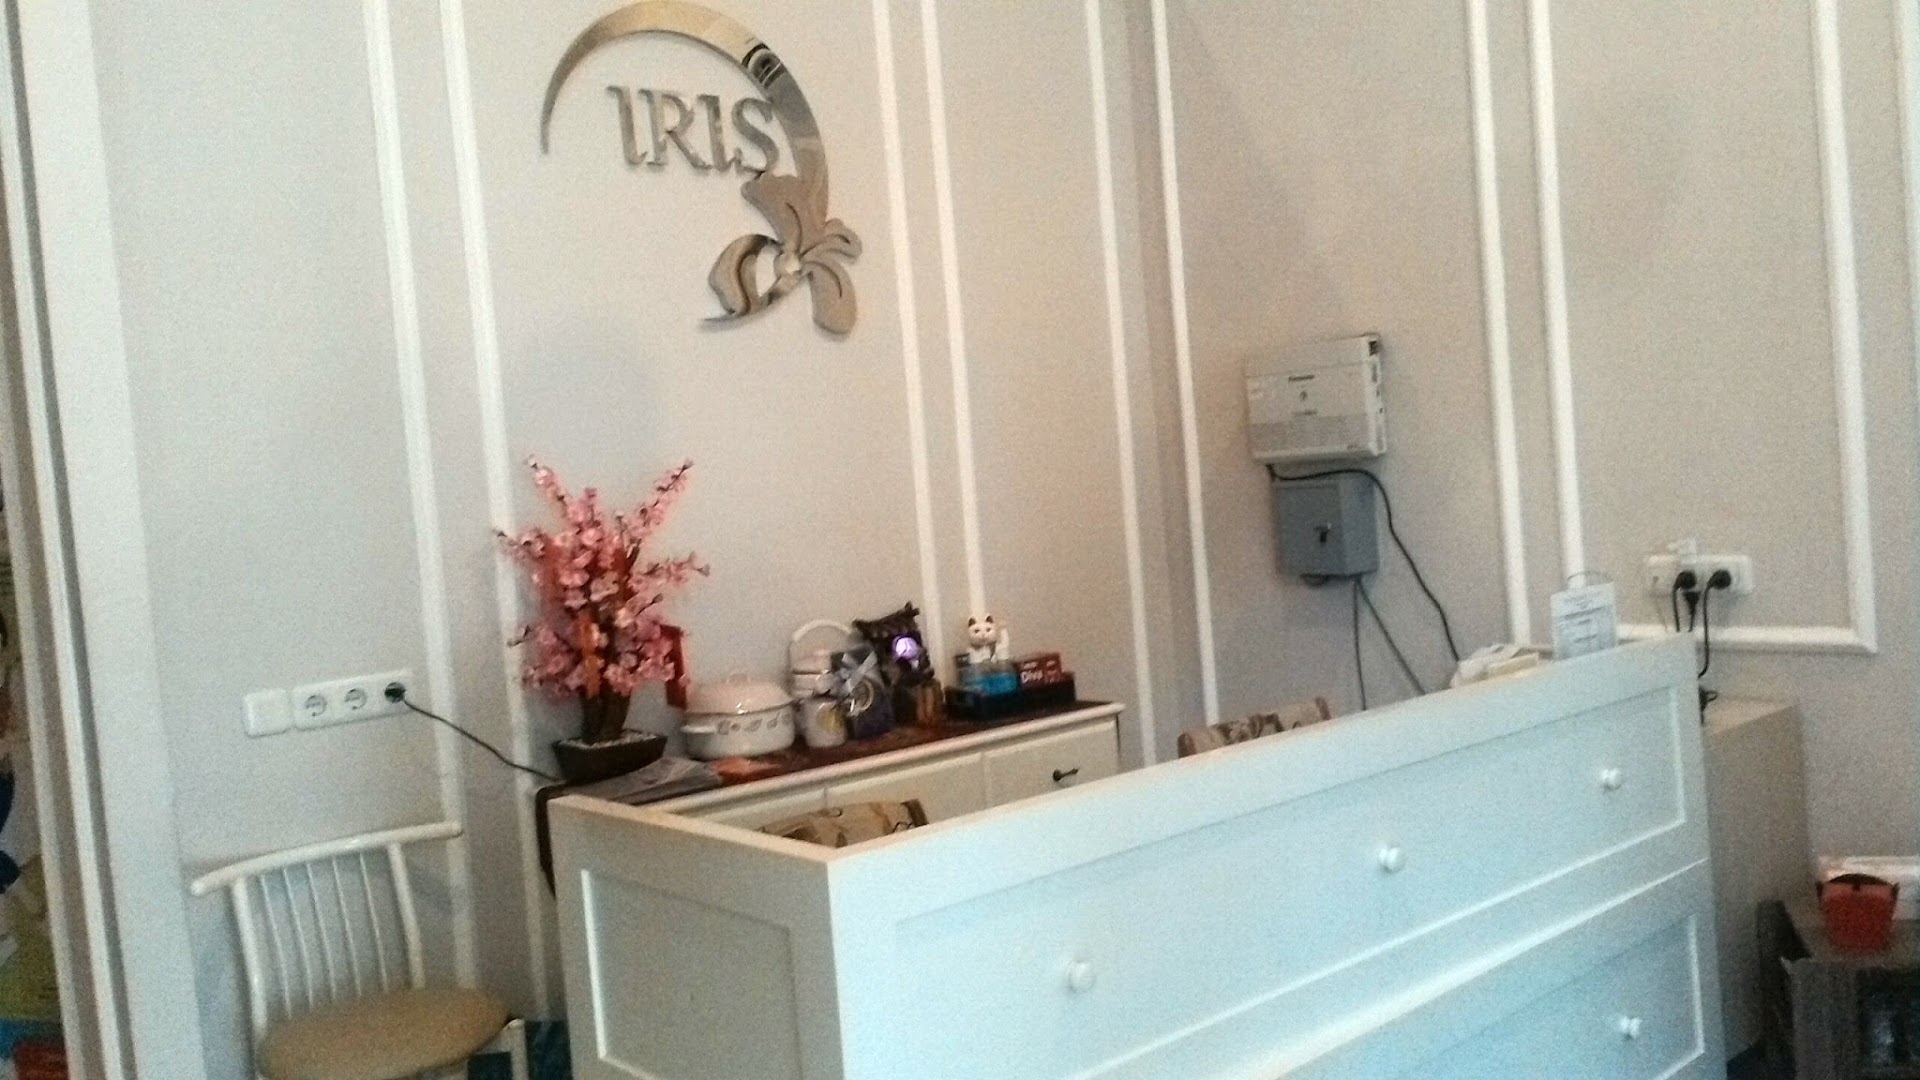 Iris Beauty Clinic Photo